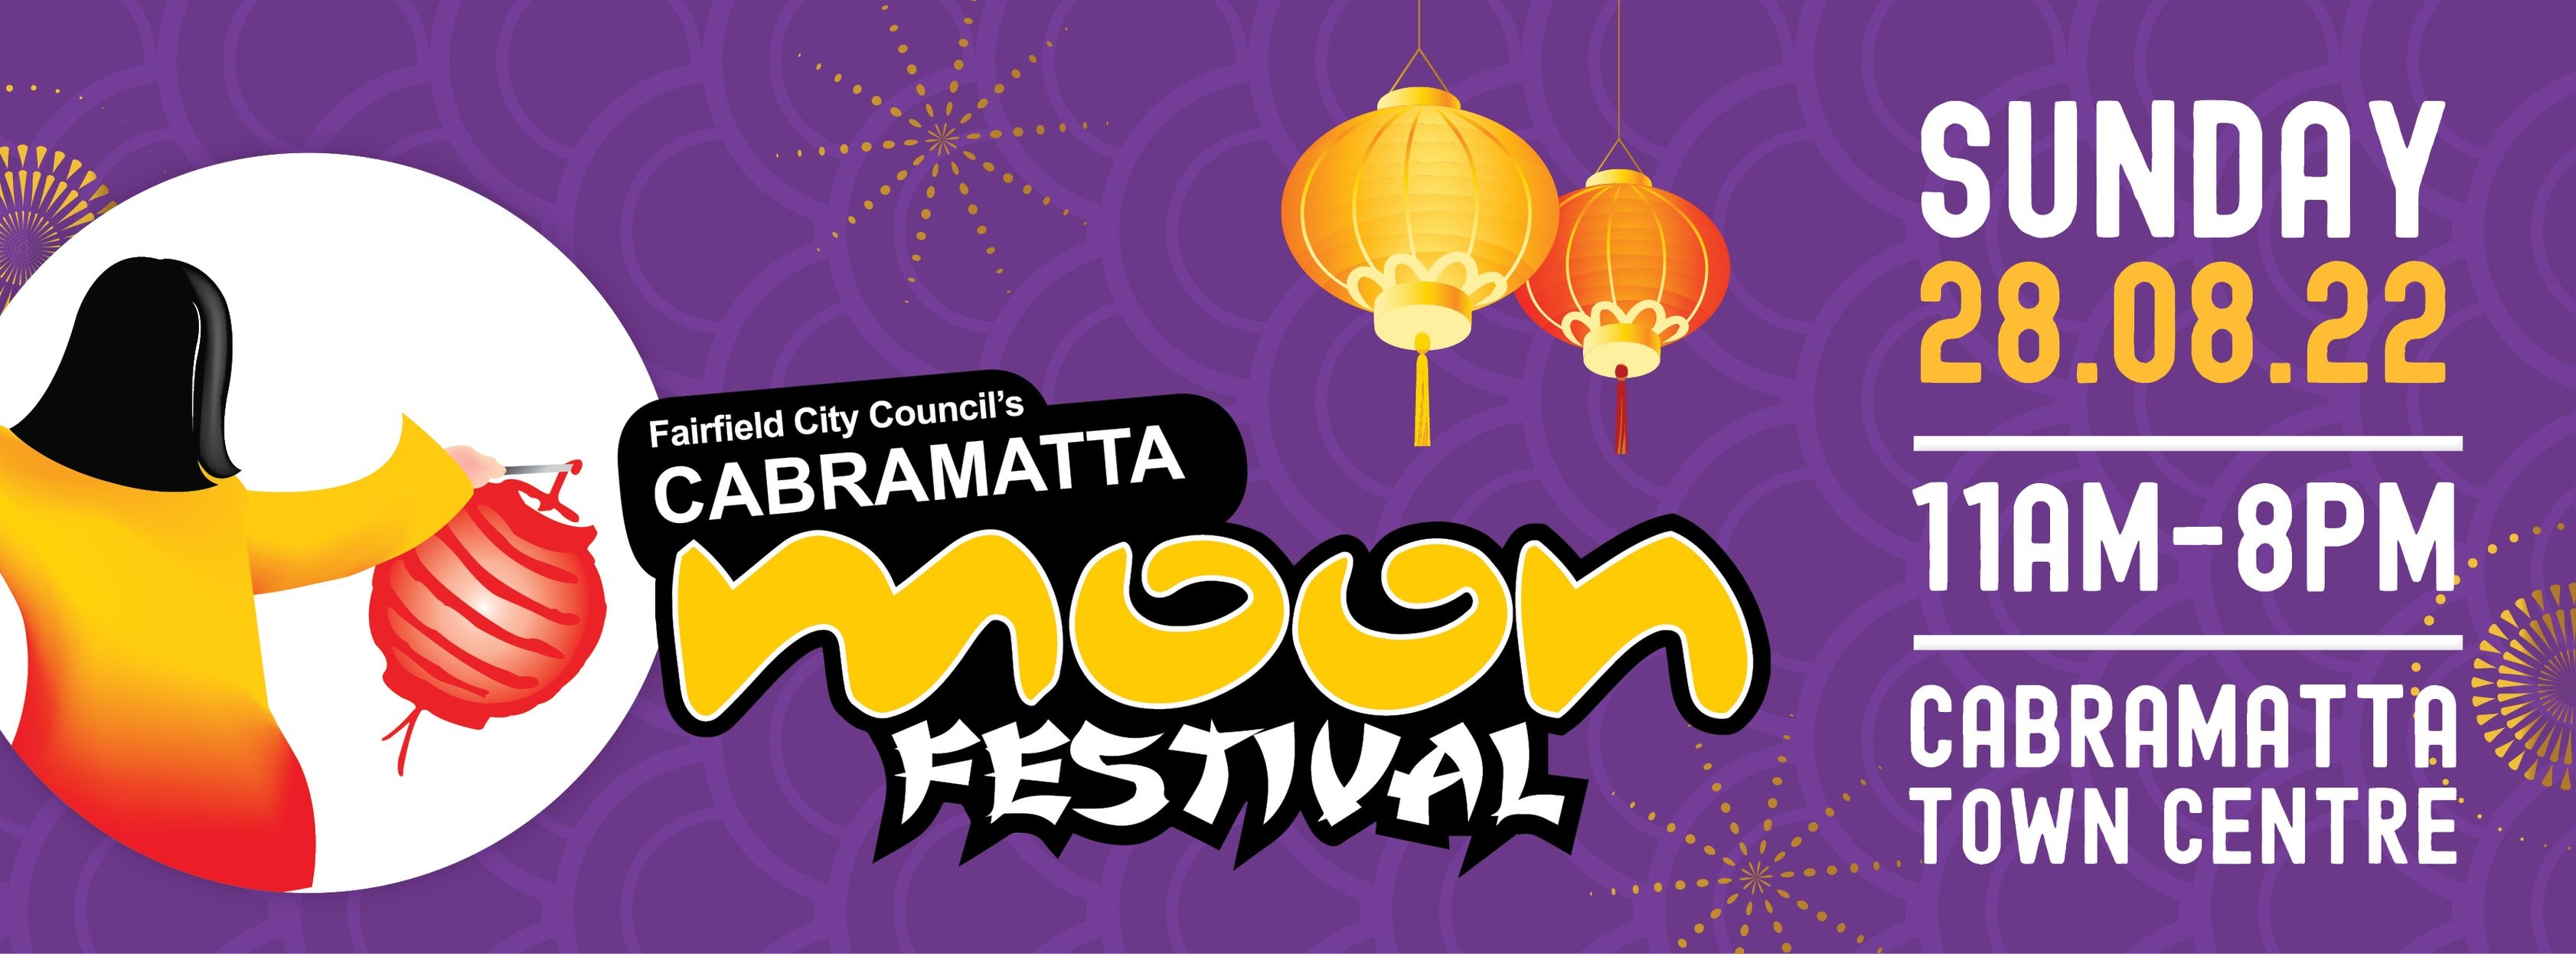 Cabramatta Moon Festival official banner - Sunday 28th August 2022, 11am-8pm in Cabramatta Town Centre